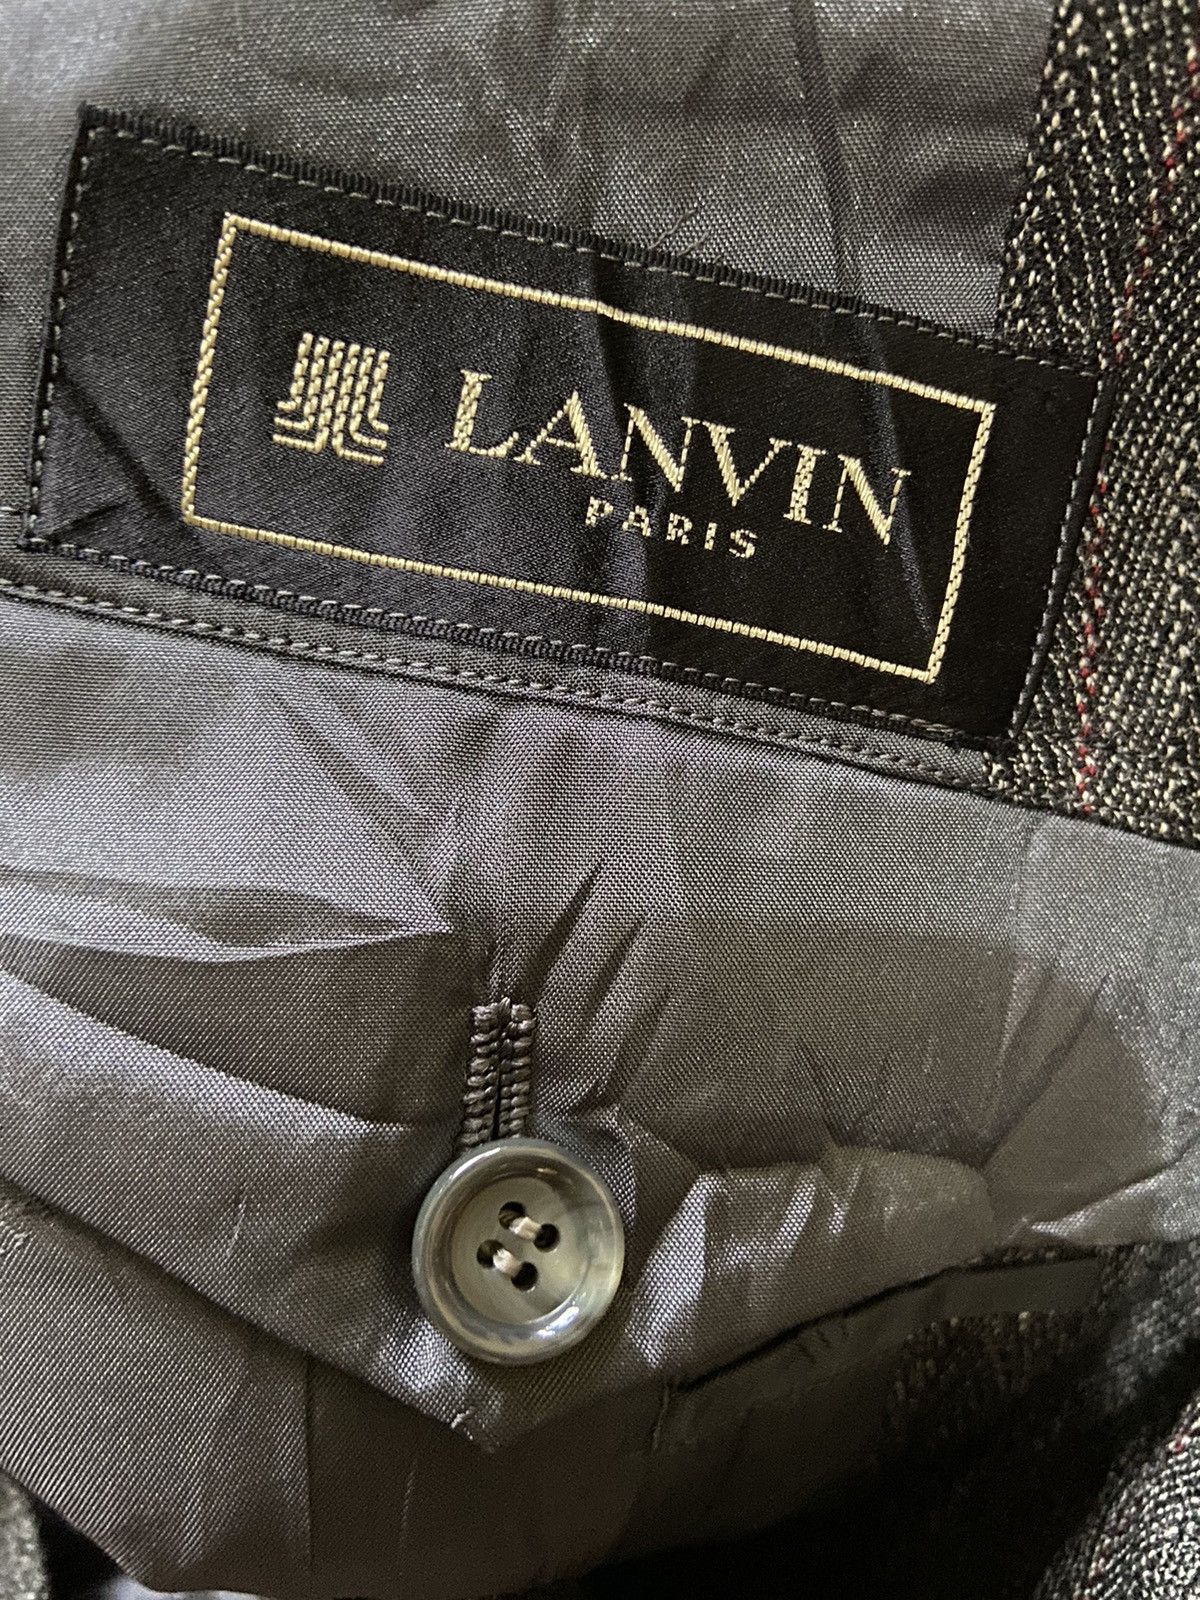 Lanvin Paris Blazer Jacket - 3